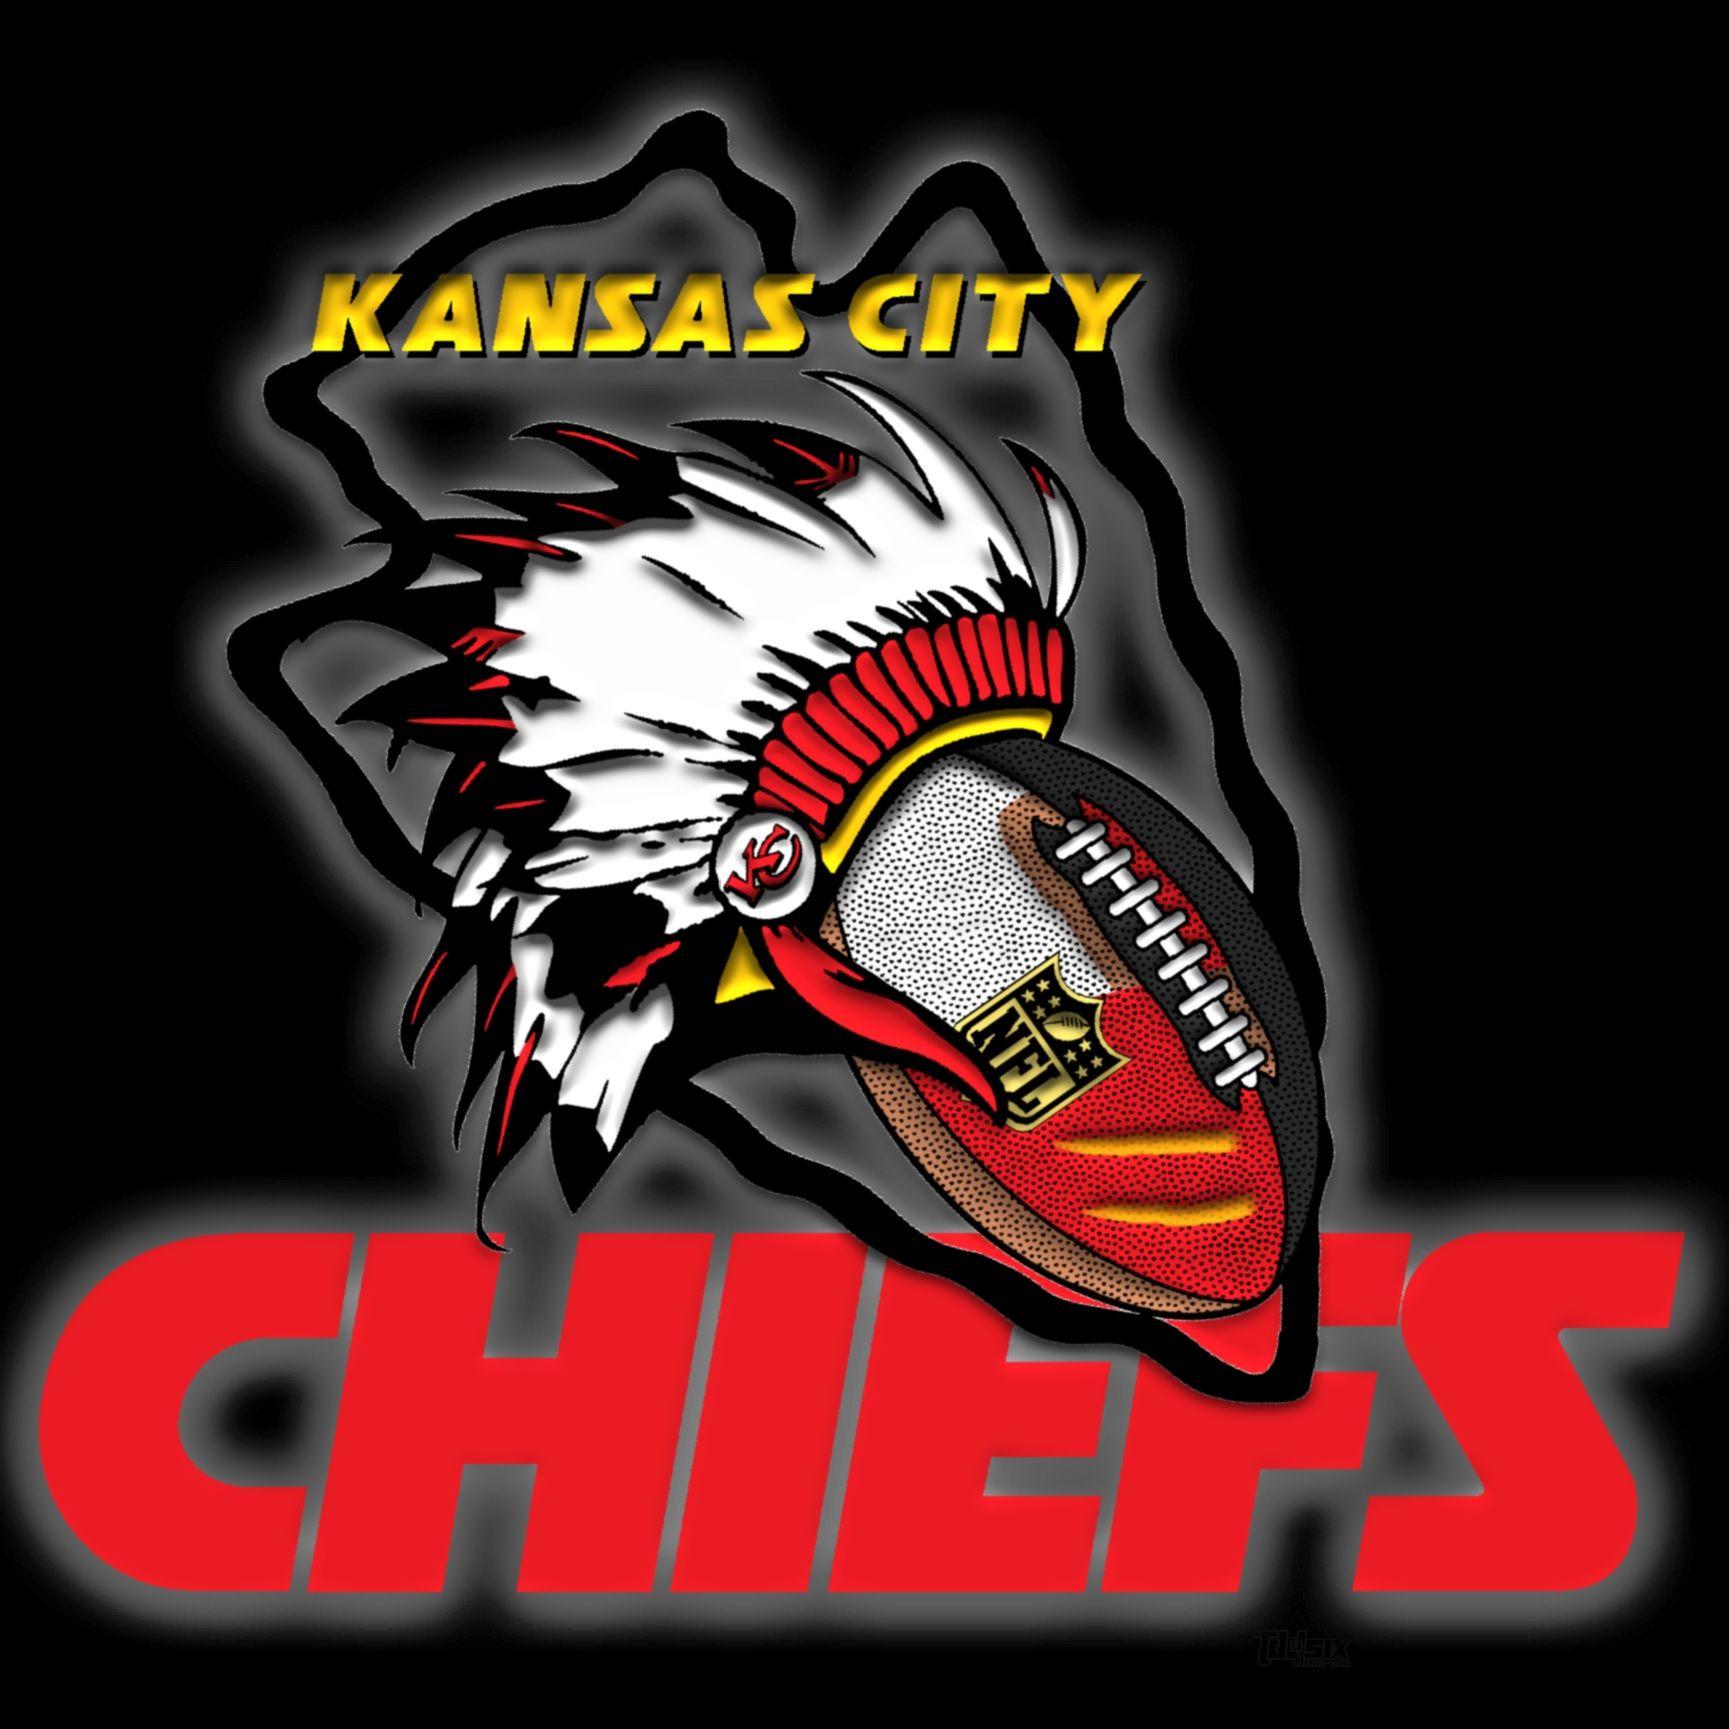 Kansas City Chiefs football. Kansas city chiefs logo, Chiefs logo